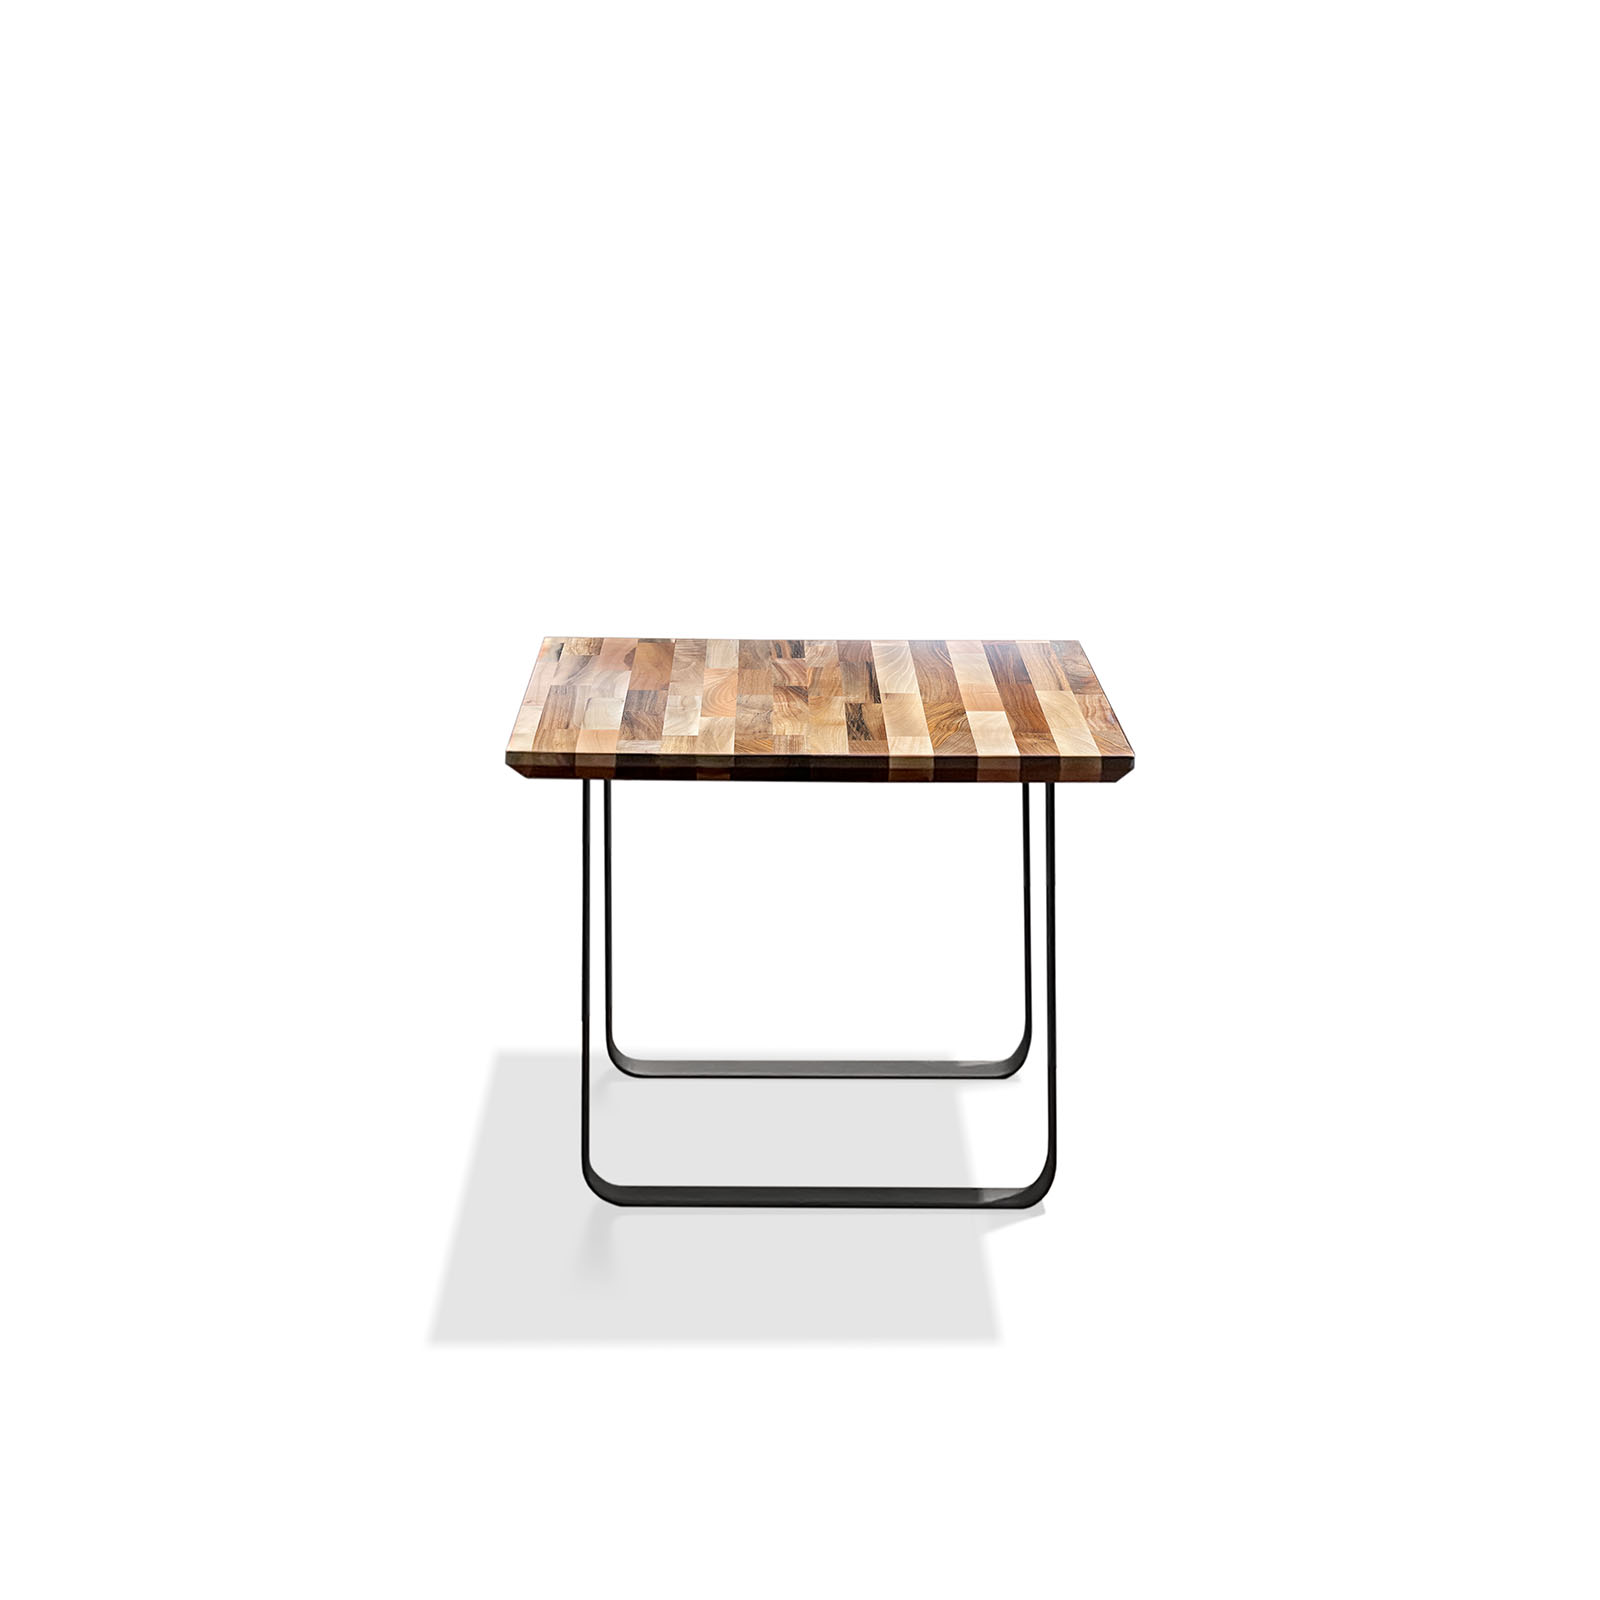 carina walnut solid walnut wood table top with black metal legs side view